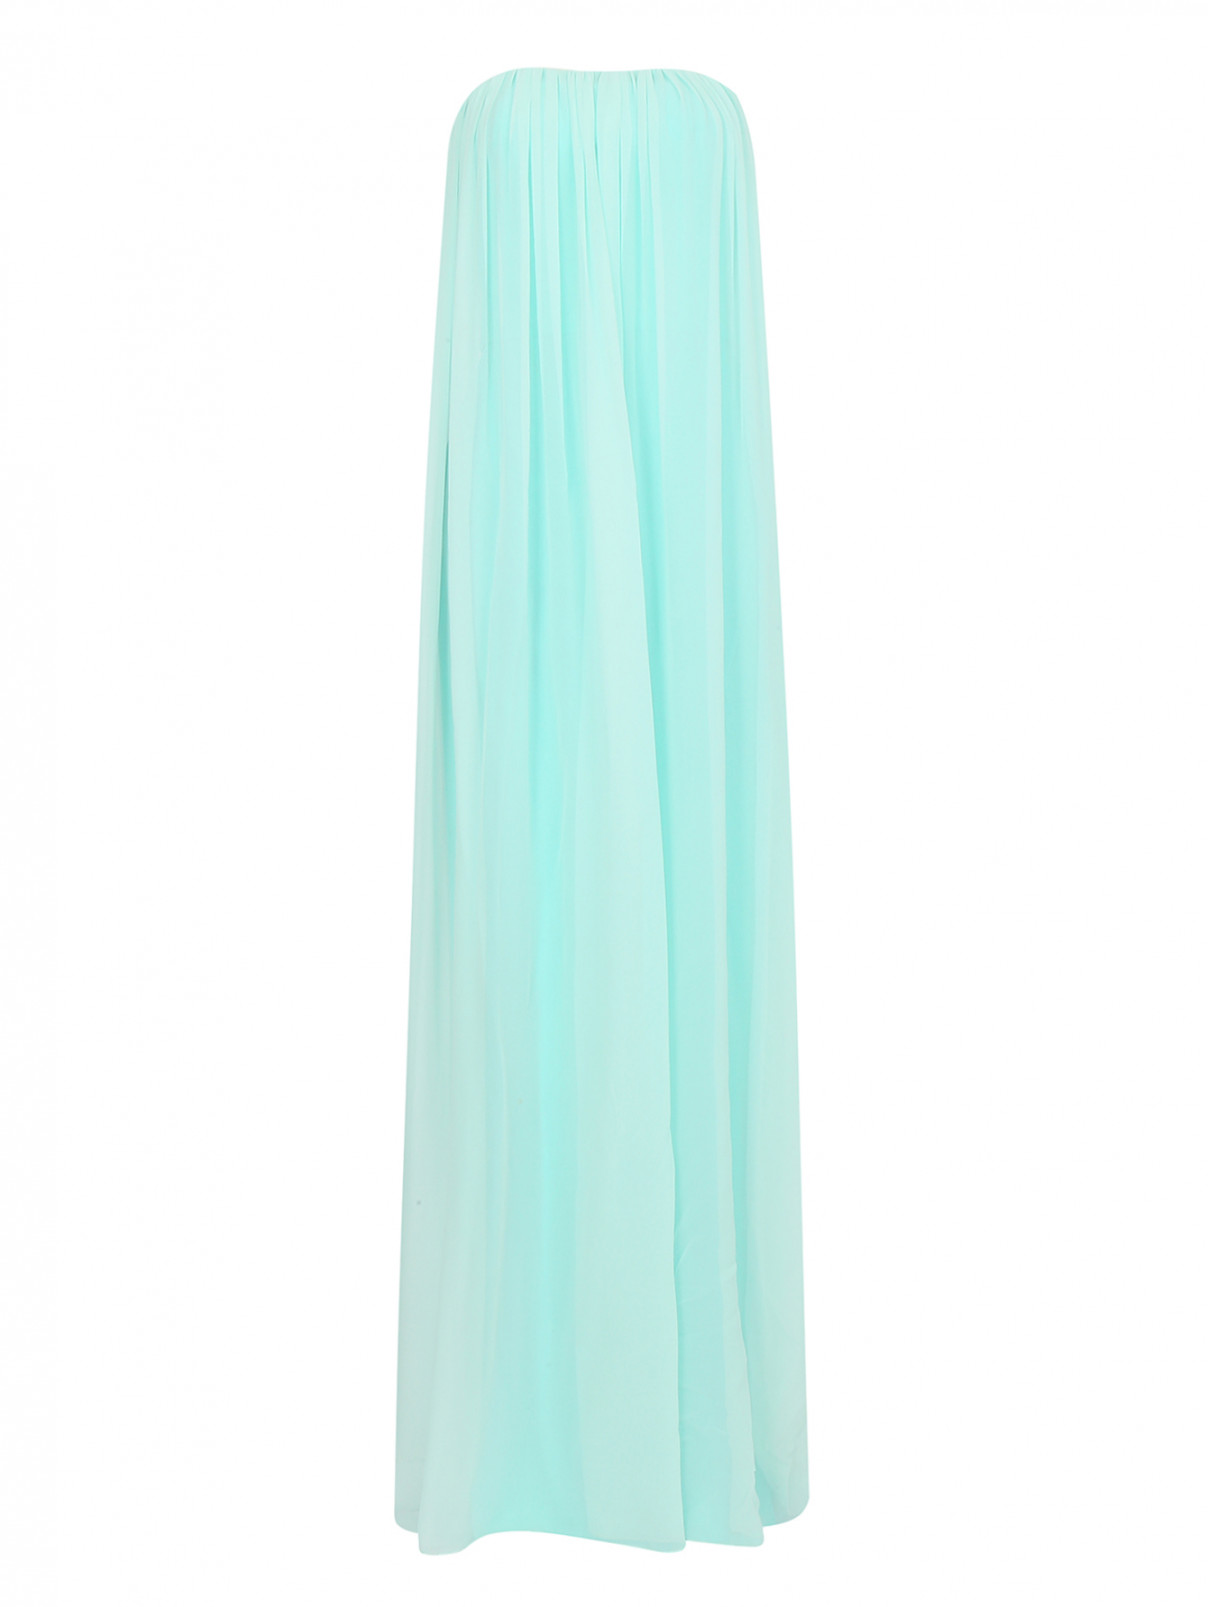 Платье-макси из шелка Kira Plastinina  –  Общий вид  – Цвет:  Синий